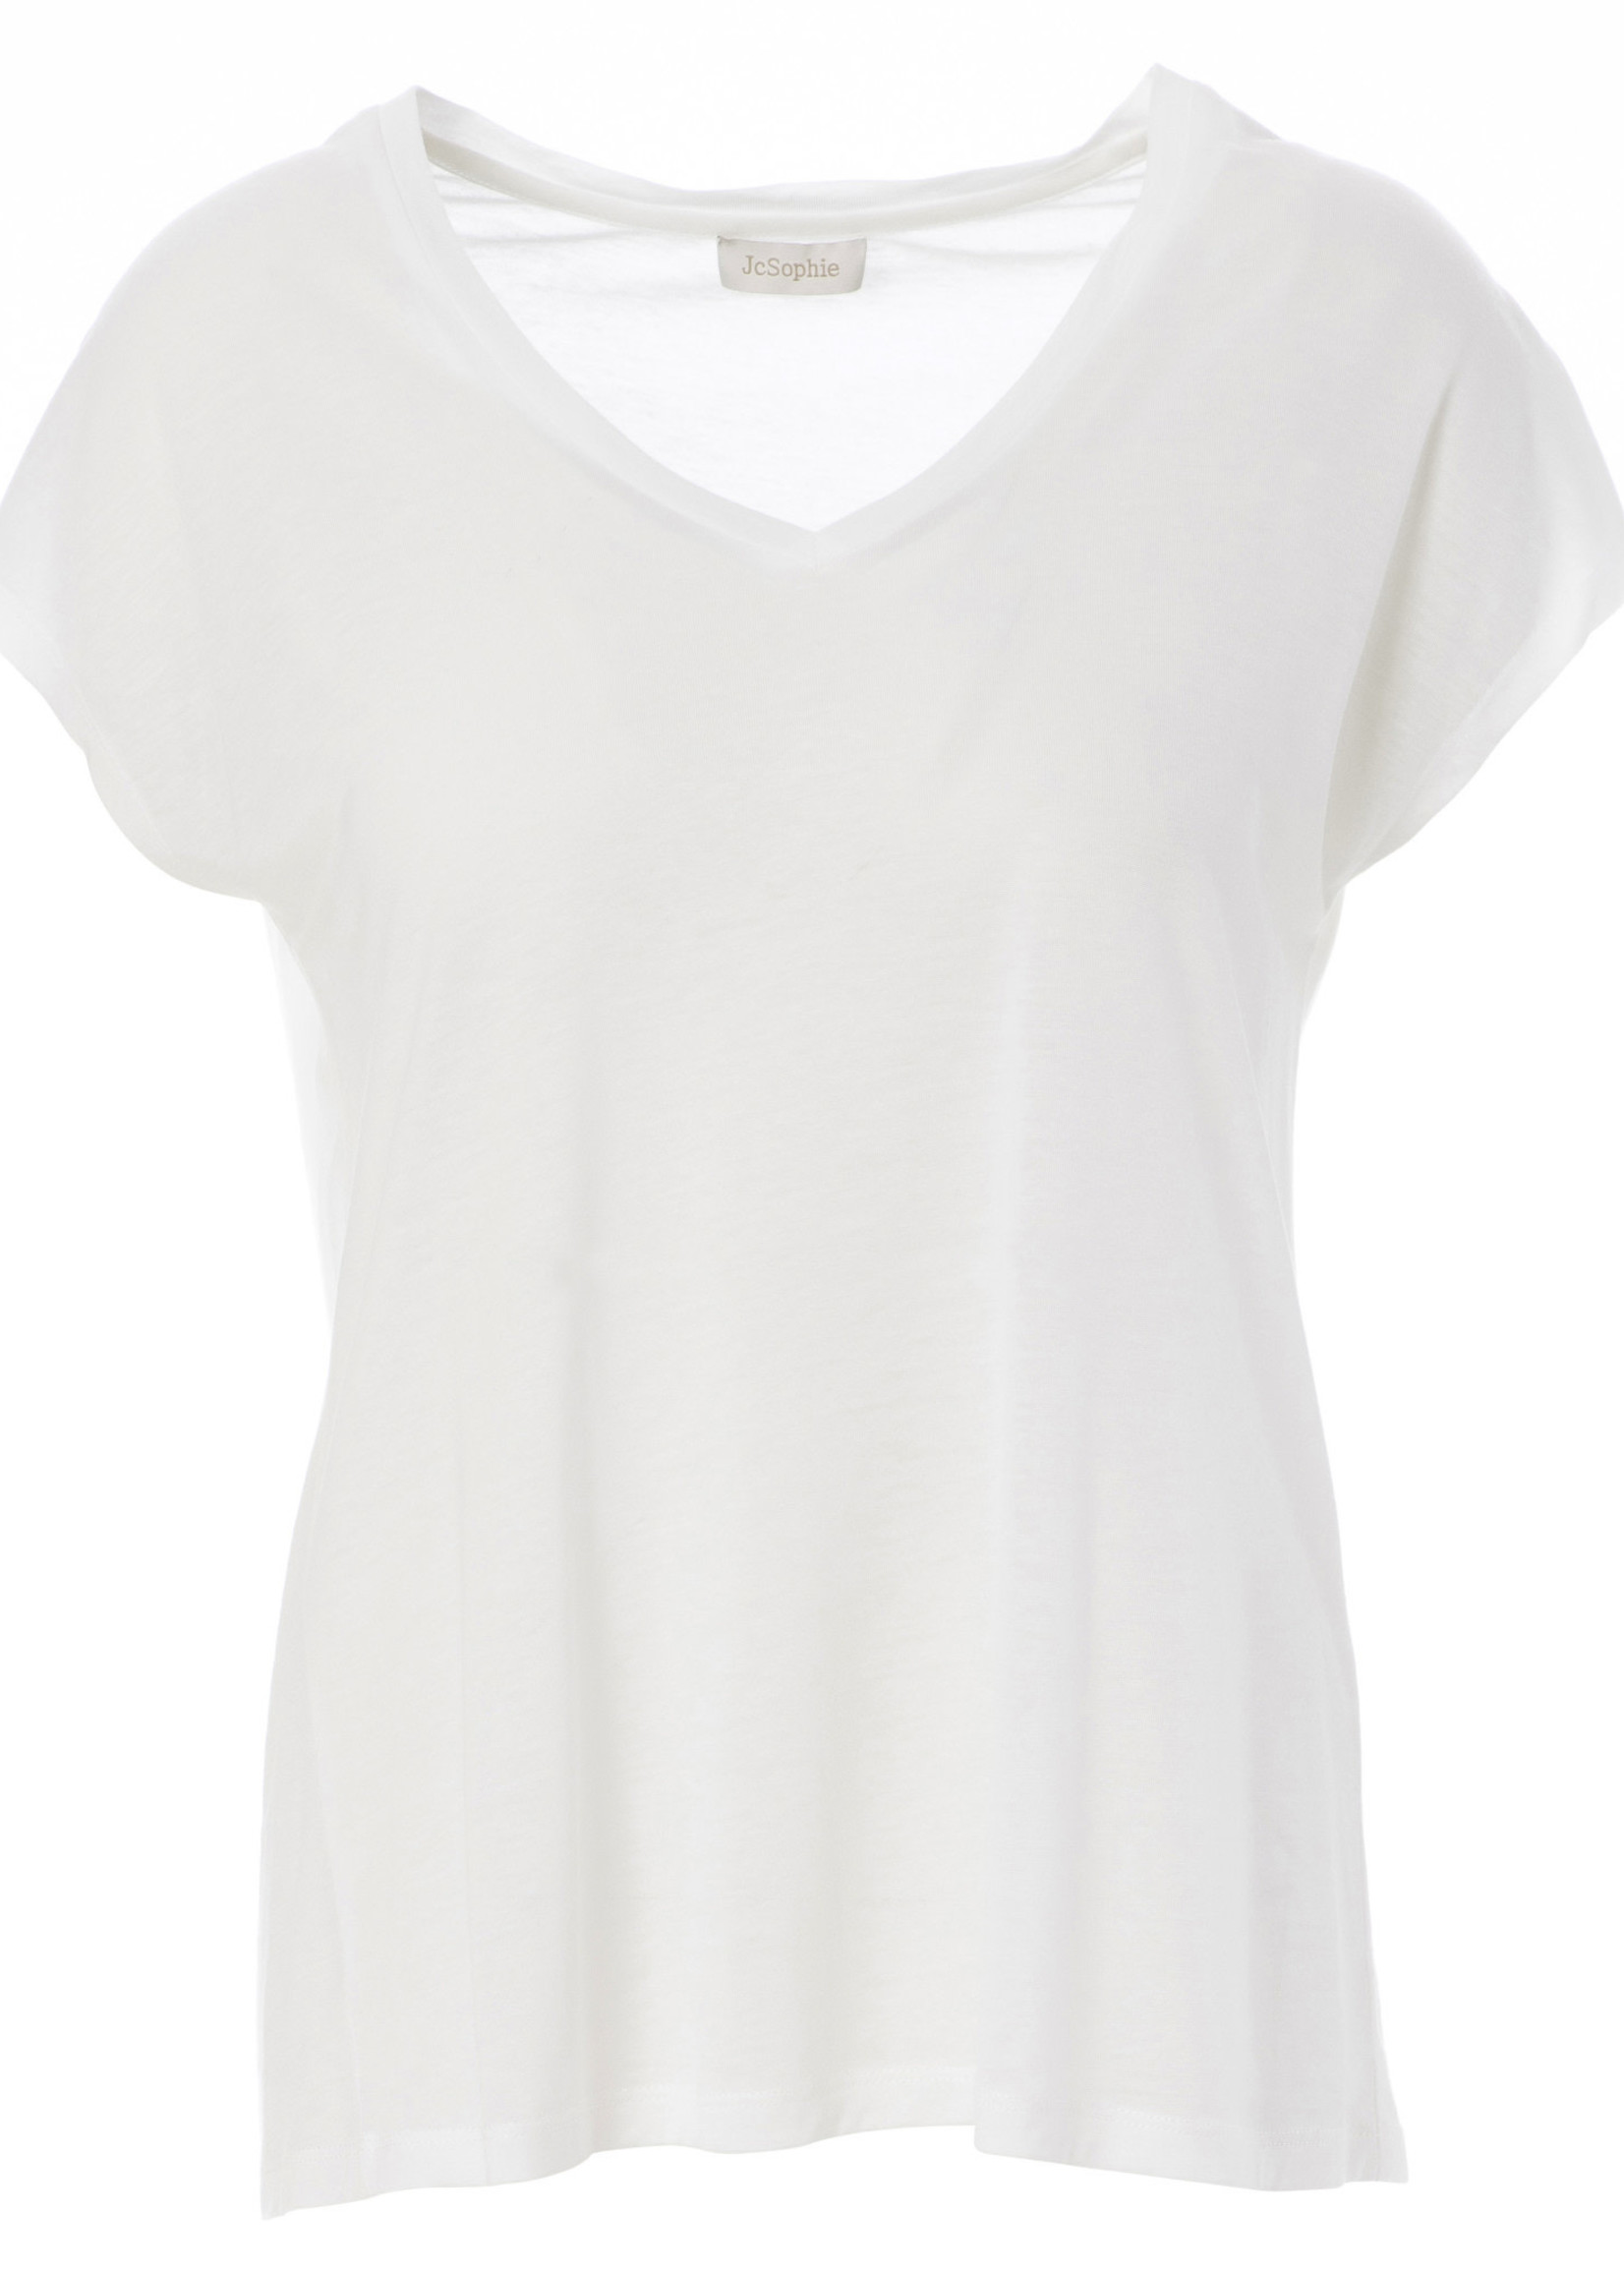 JC Sophie Swan T-shirt Off White